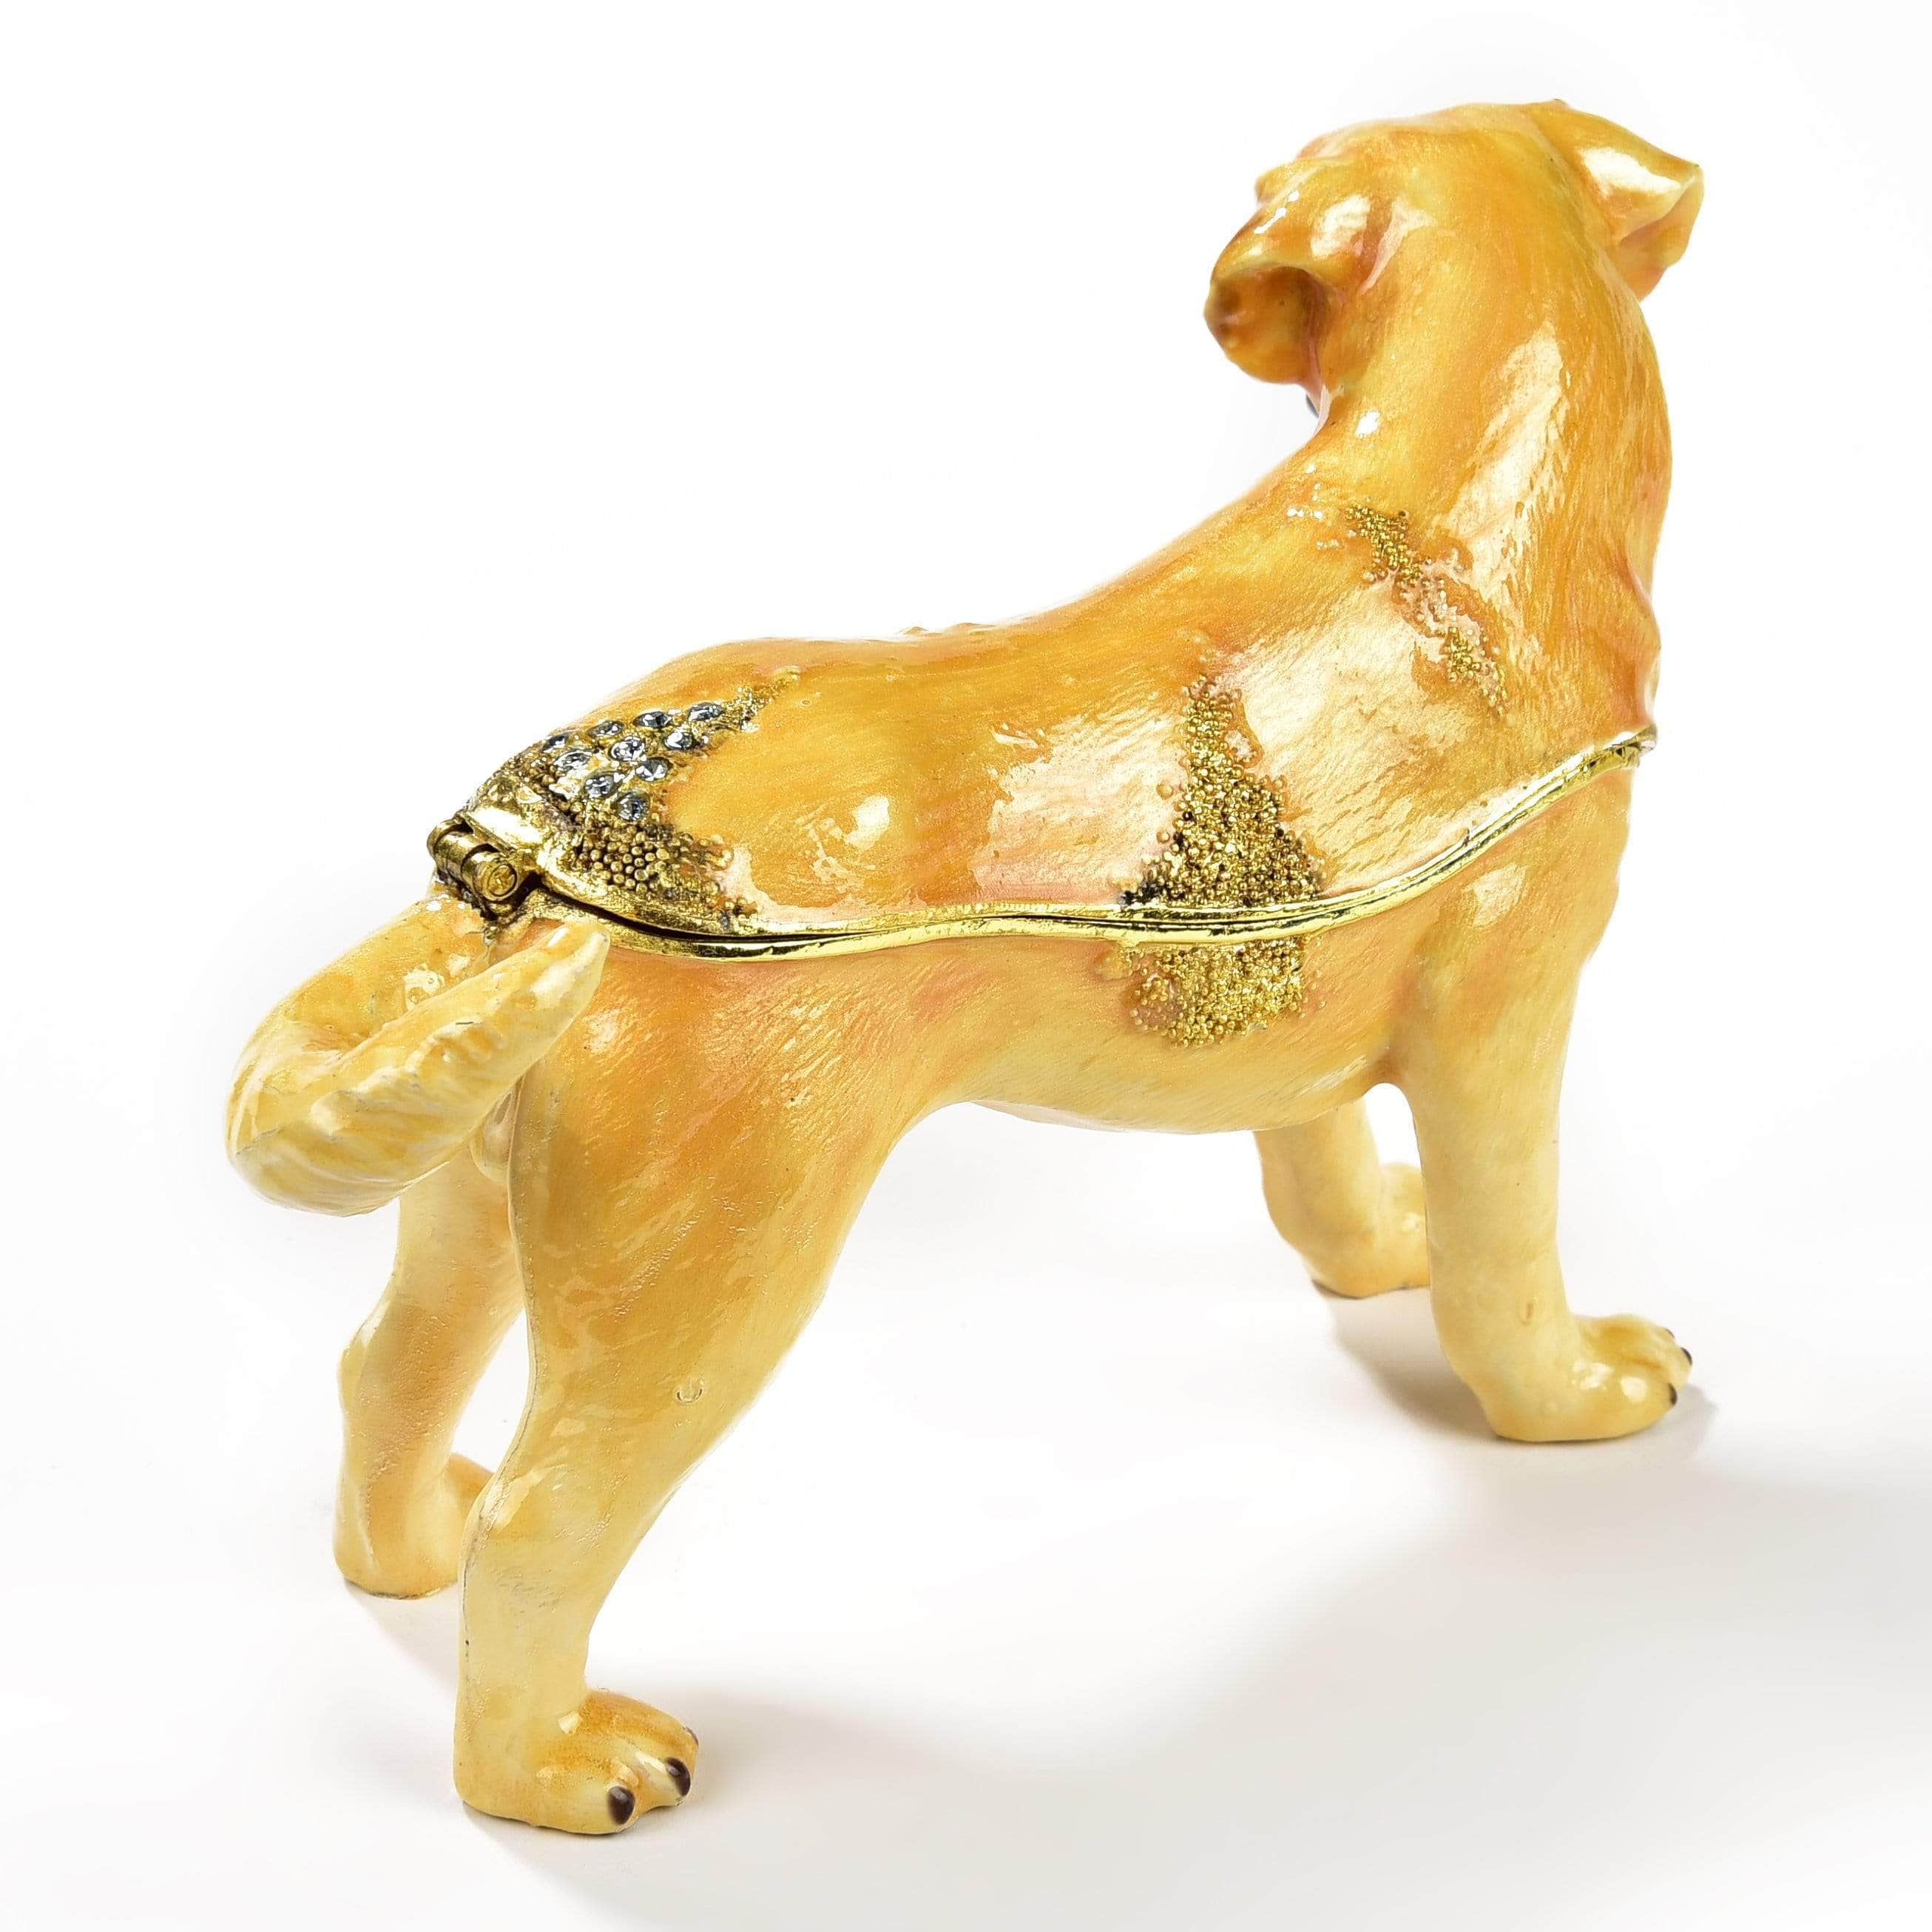 Kalifano Vanity Figurine Labrador Retriever Figurine Keepsake Box made with Crystals SVA-066